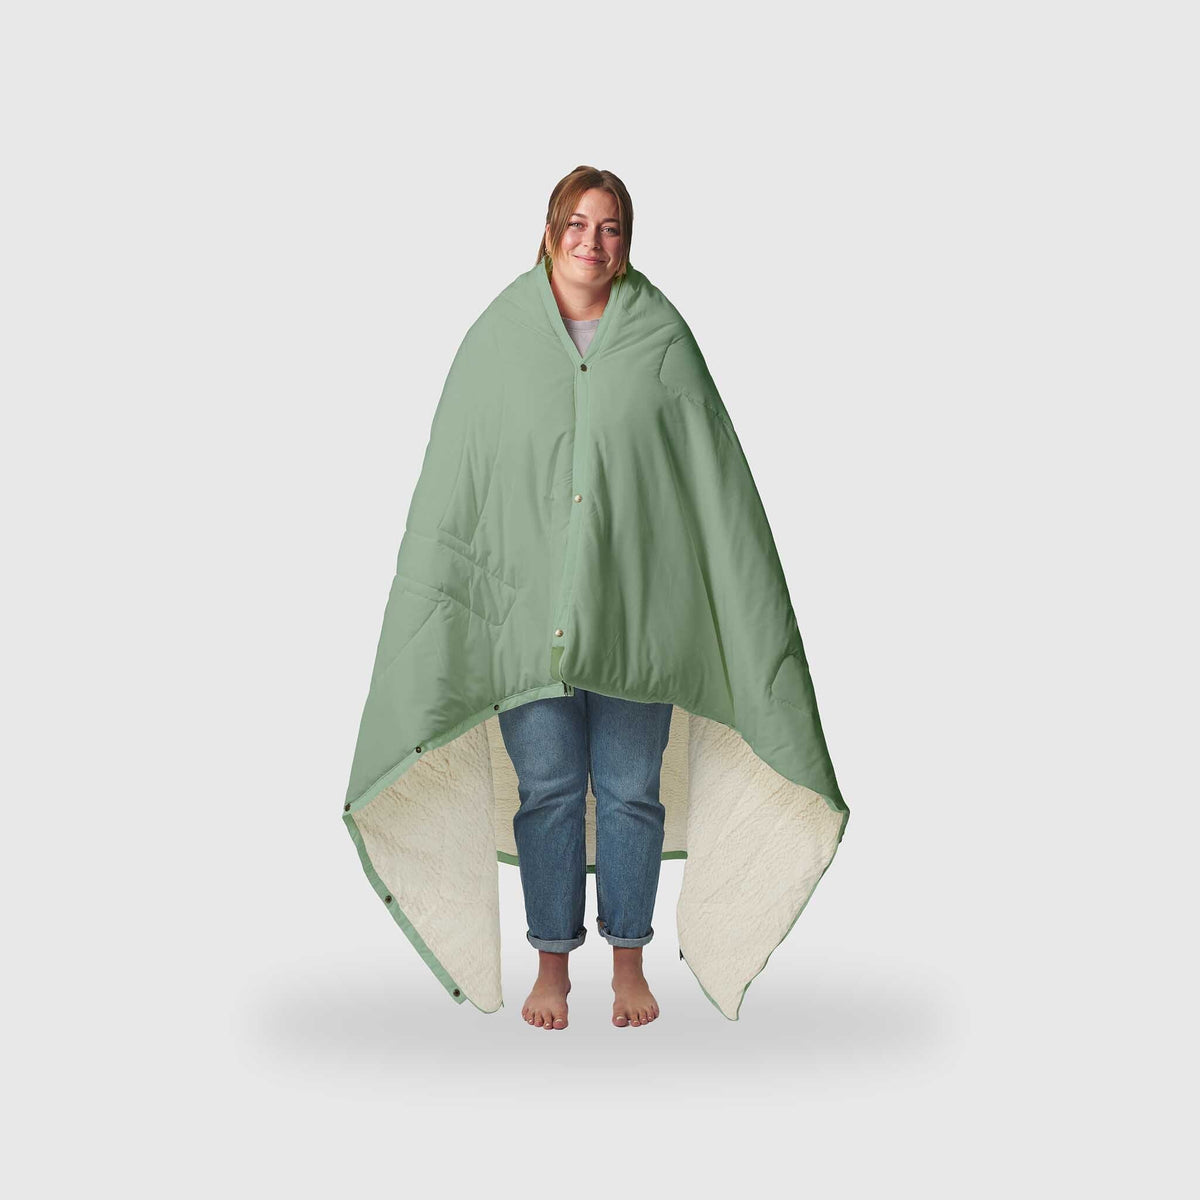 VOITED CloudTouch® Indoor/Outdoor Camping Blanket - Cameo Green